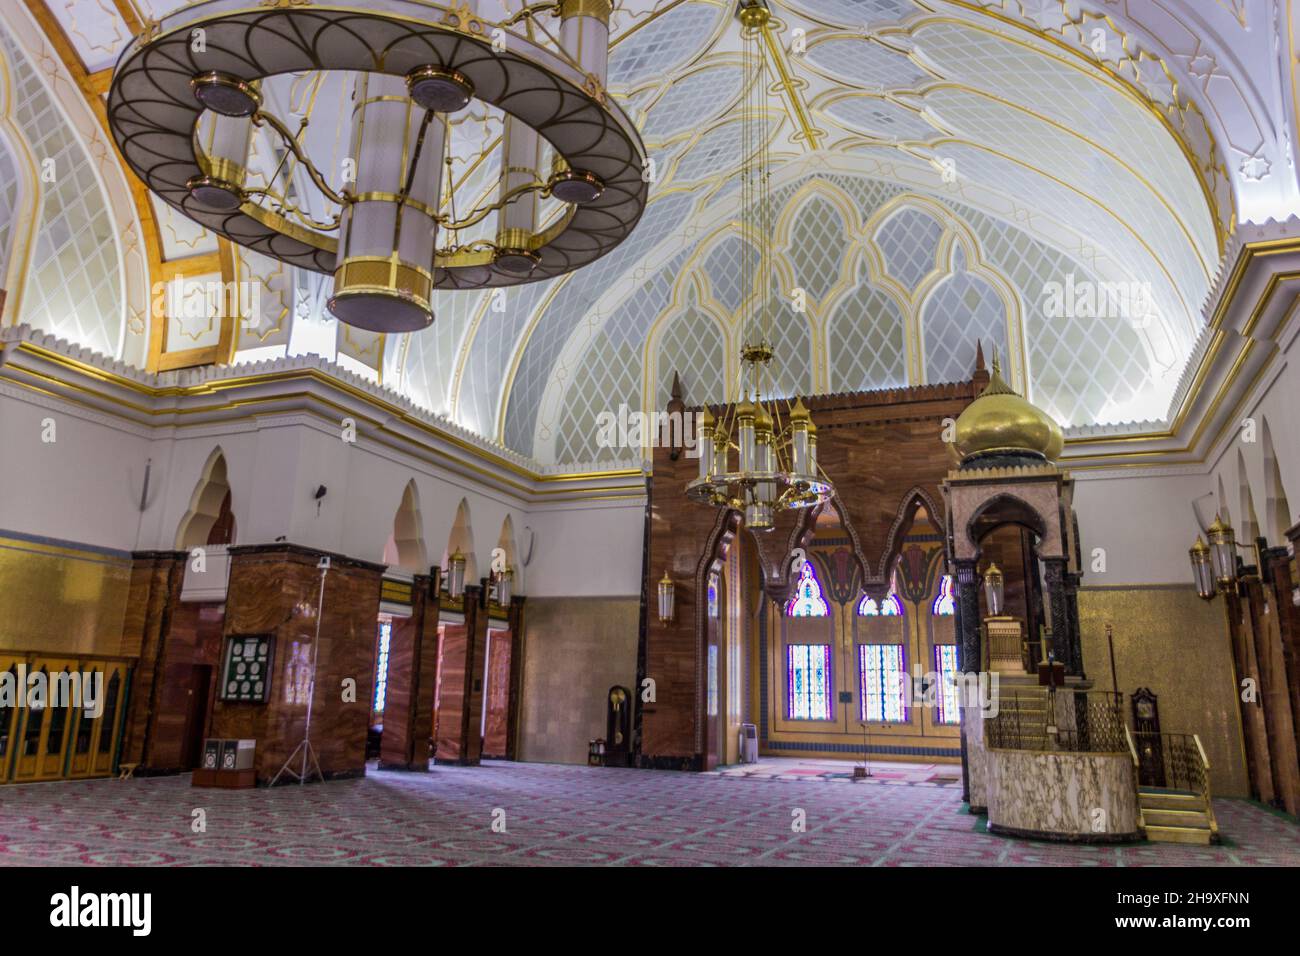 BANDAR SERI BEGAWAN, BRUNEI - FEBRUARY 27, 2018: Interior of Omar Ali Saifuddien Mosque in Bandar Seri Begawan, Brunei Stock Photo